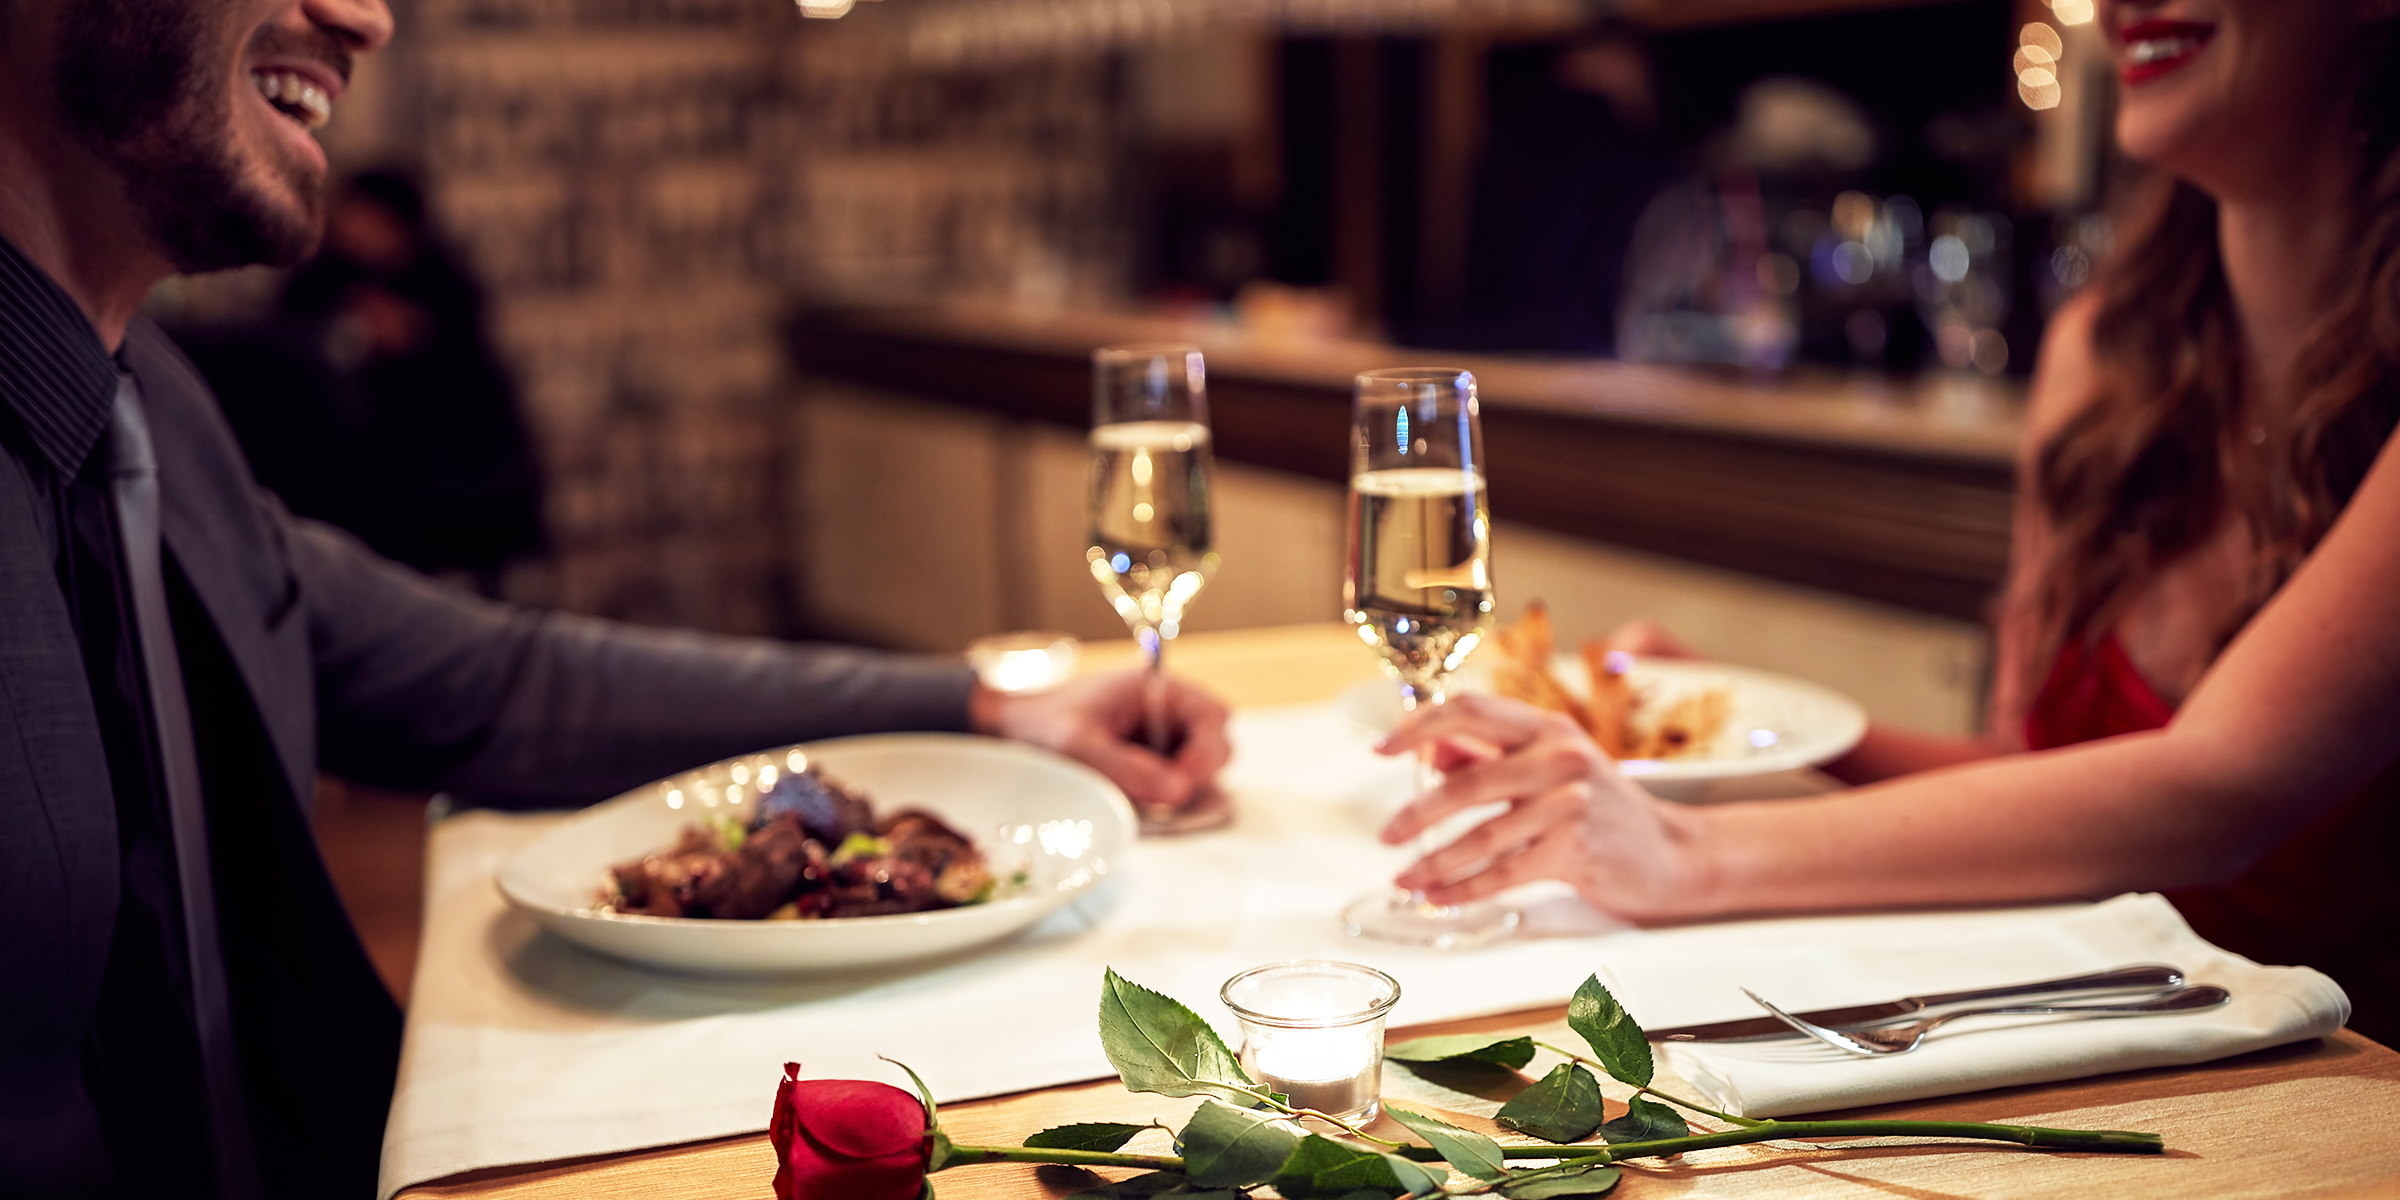 A couple having a romantic dinner | Source: Shutterstock